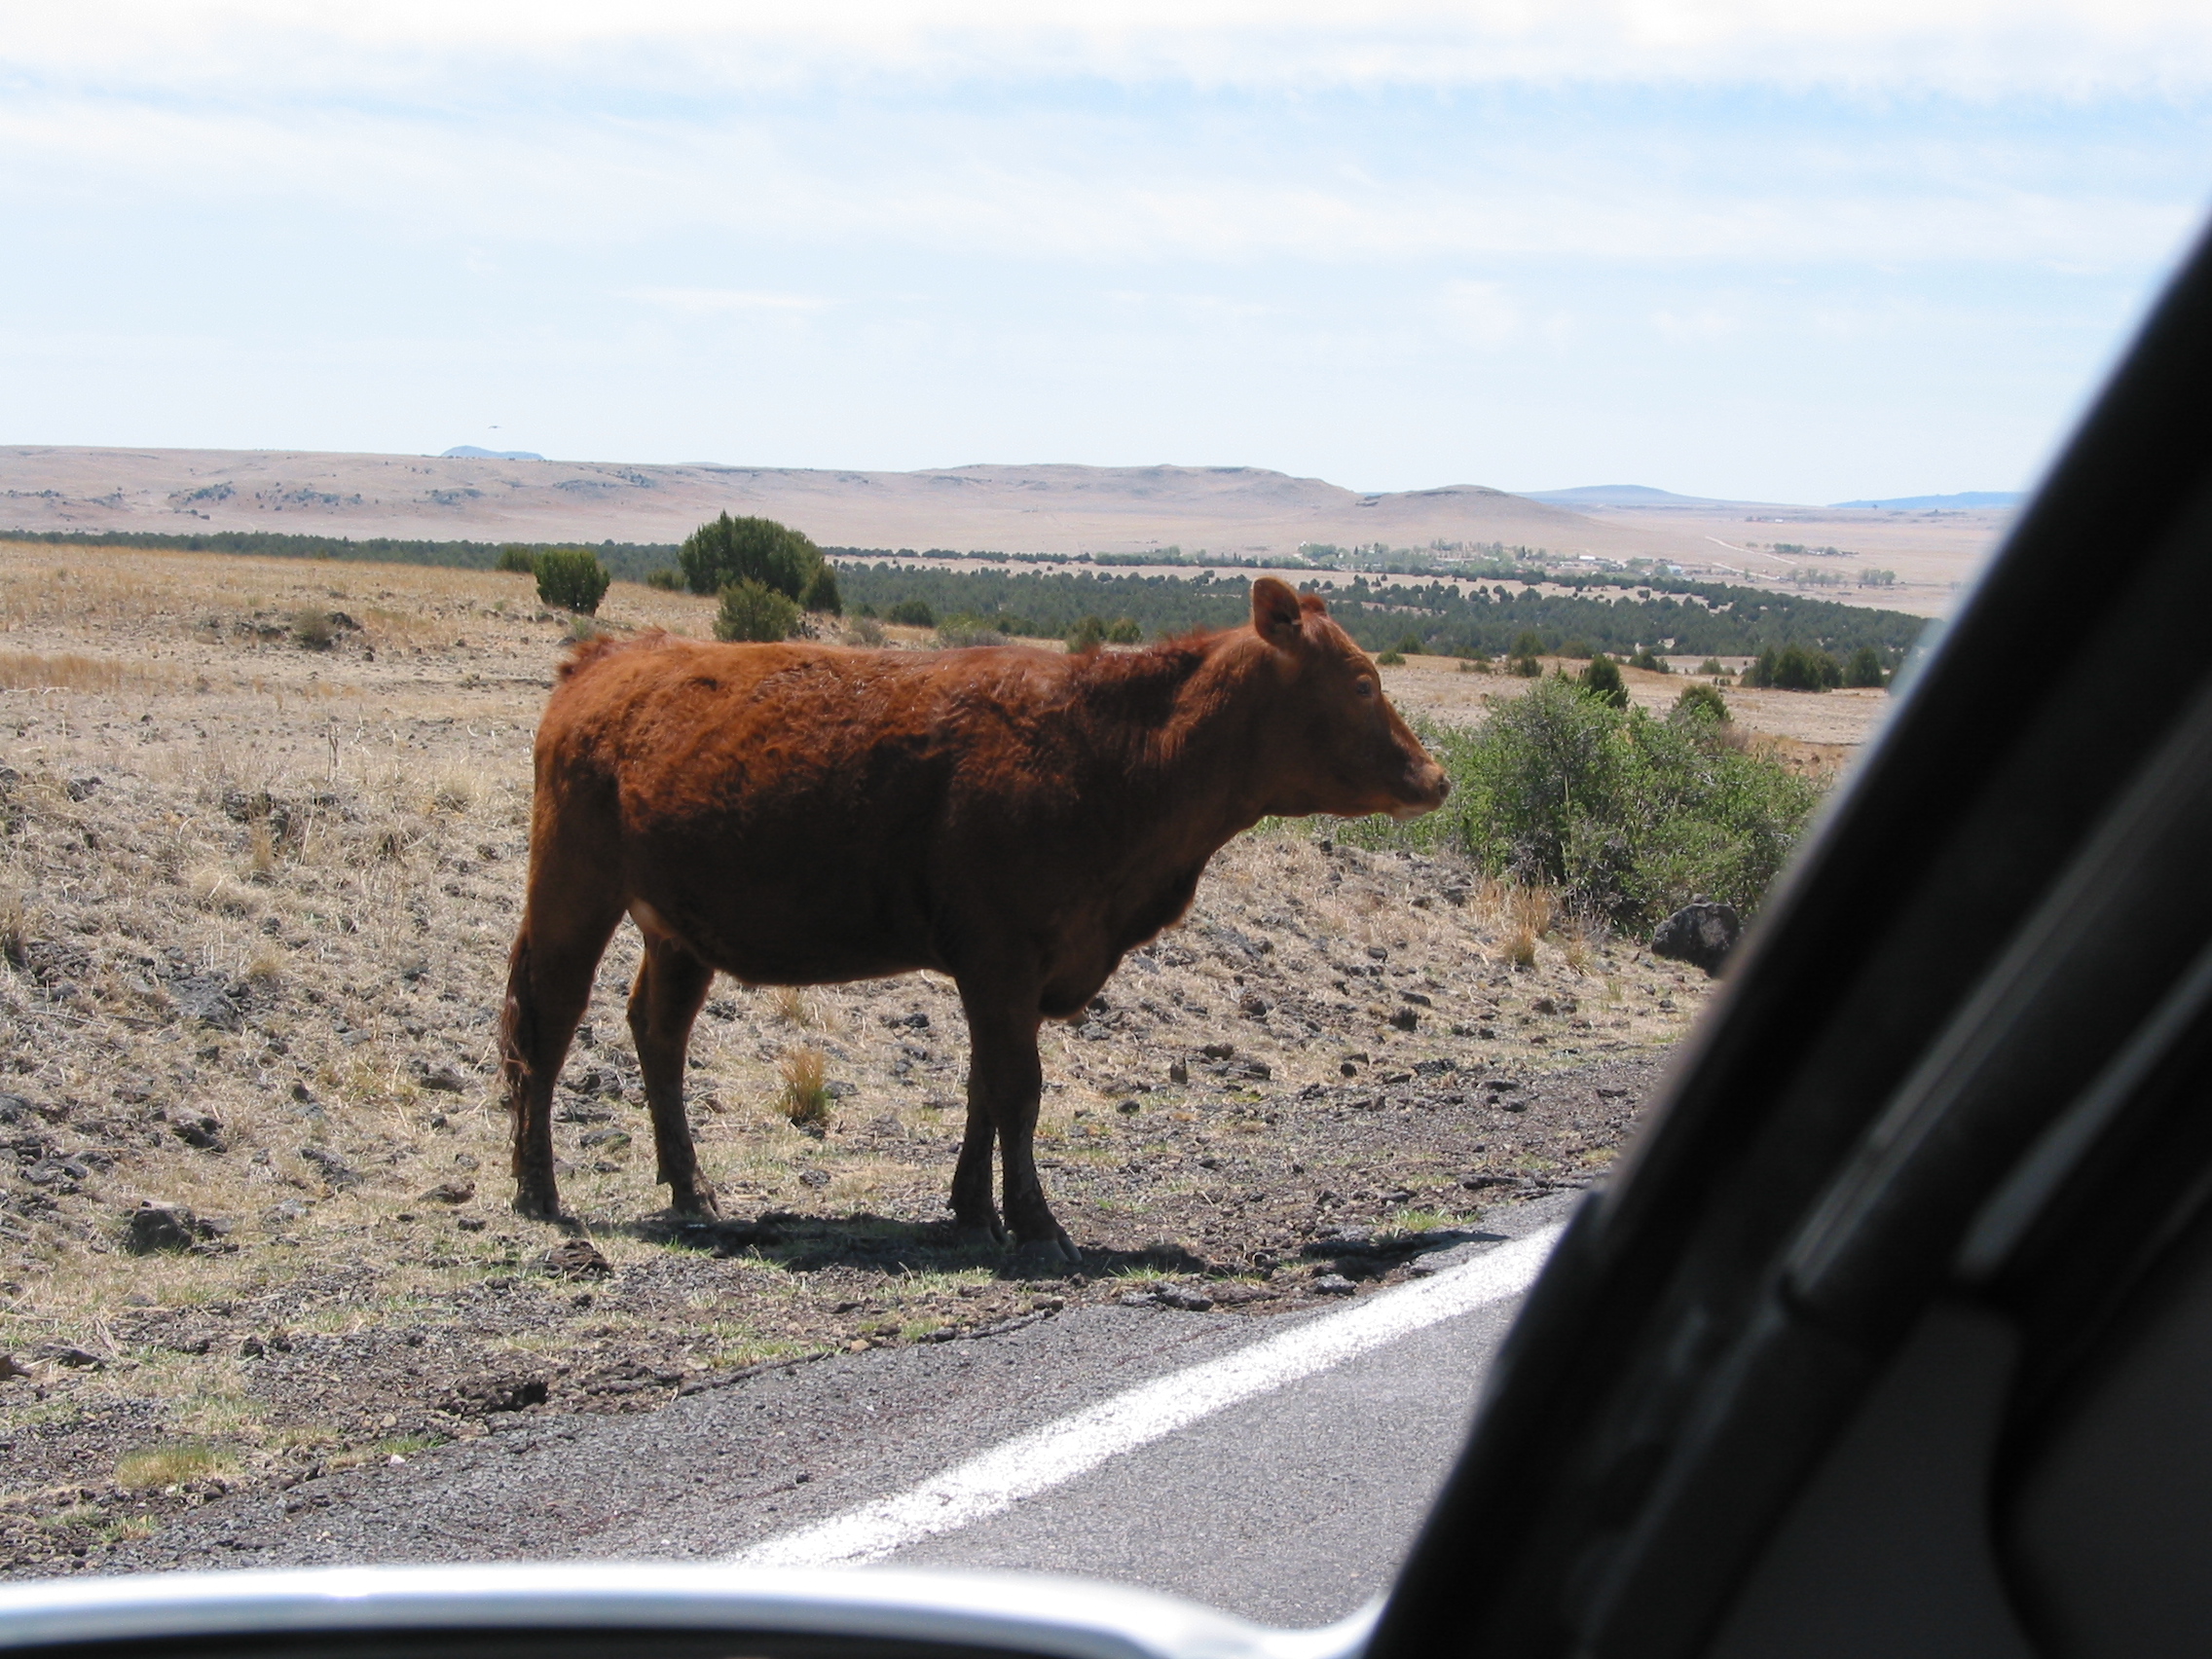 bovine roadway obstruction